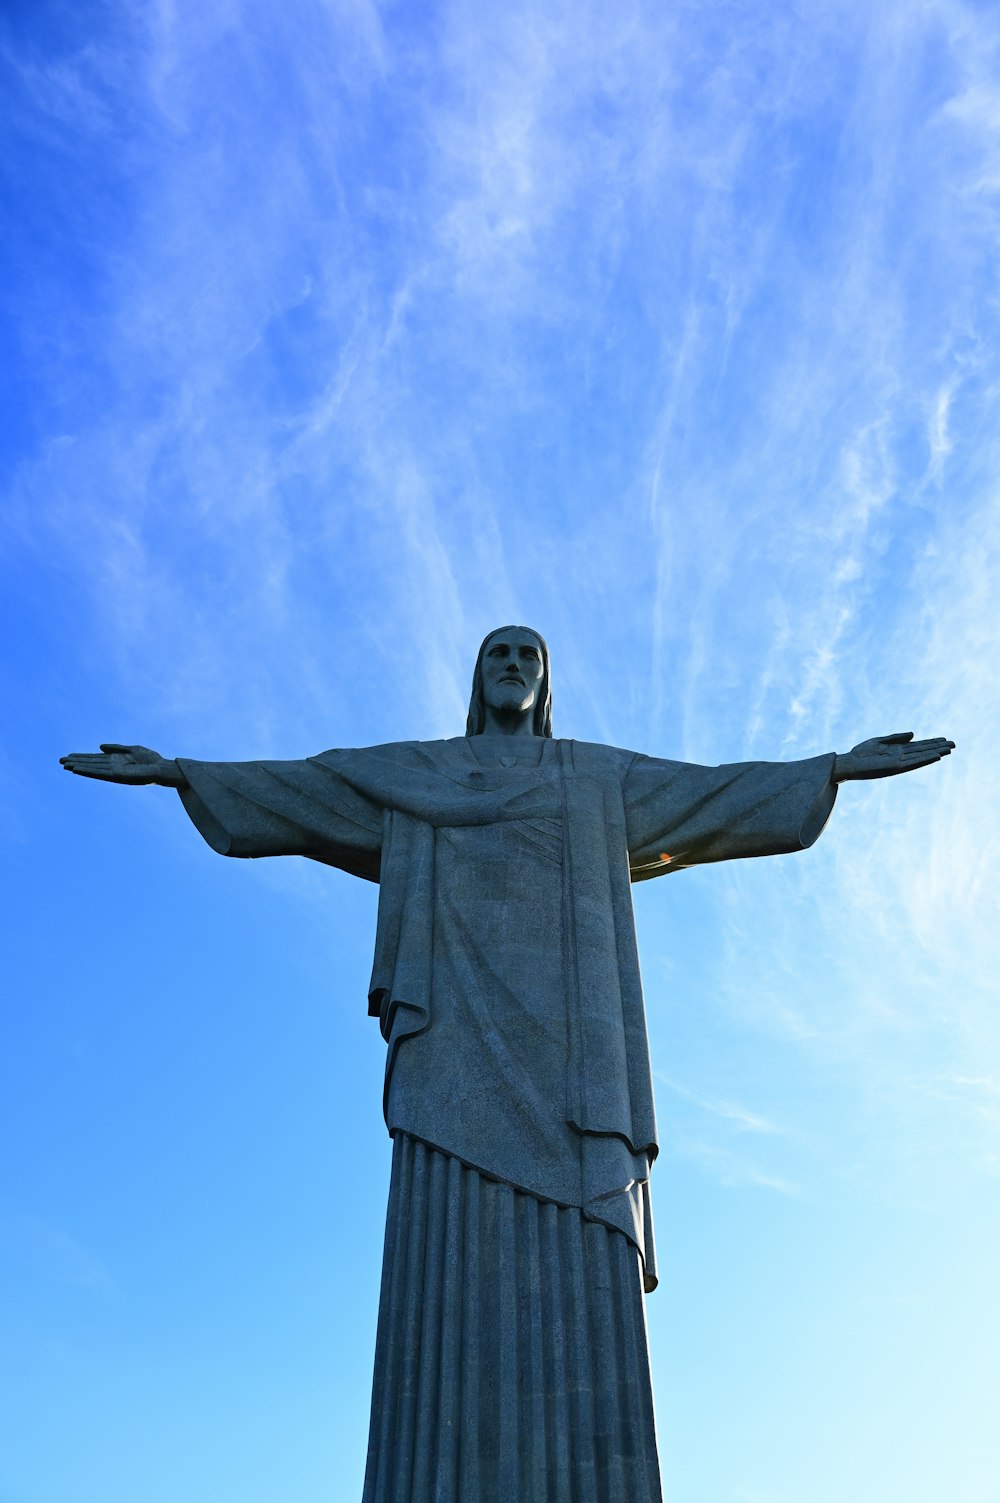 La estatua de Cristo se encuentra frente a un cielo azul